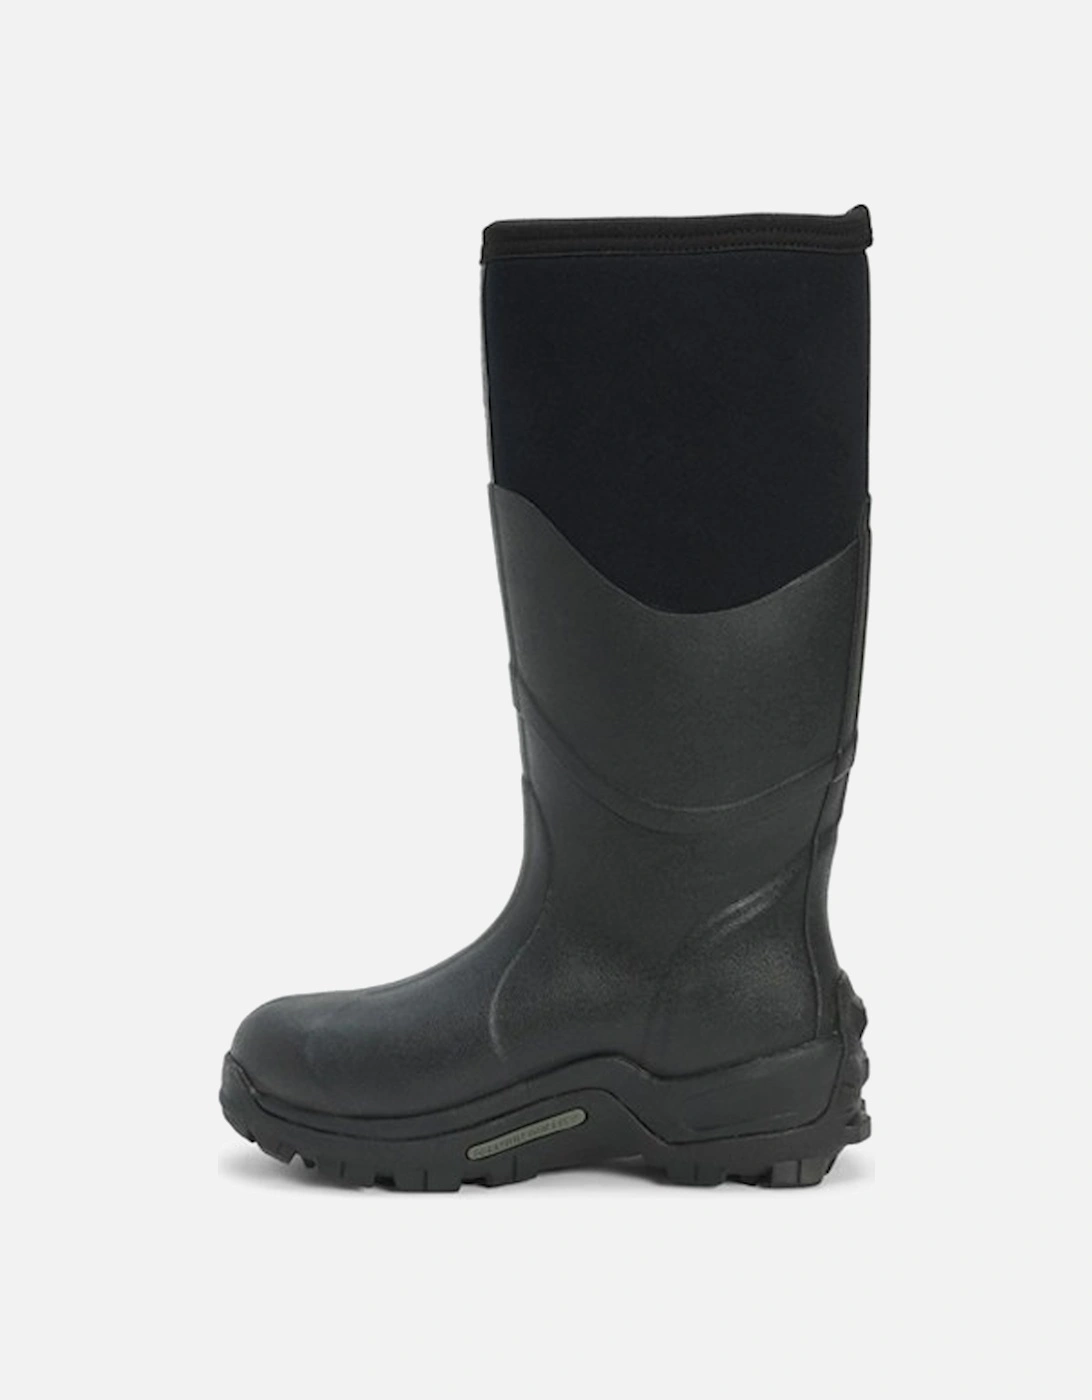 Unisex Muckmaster Tall  Boots Black